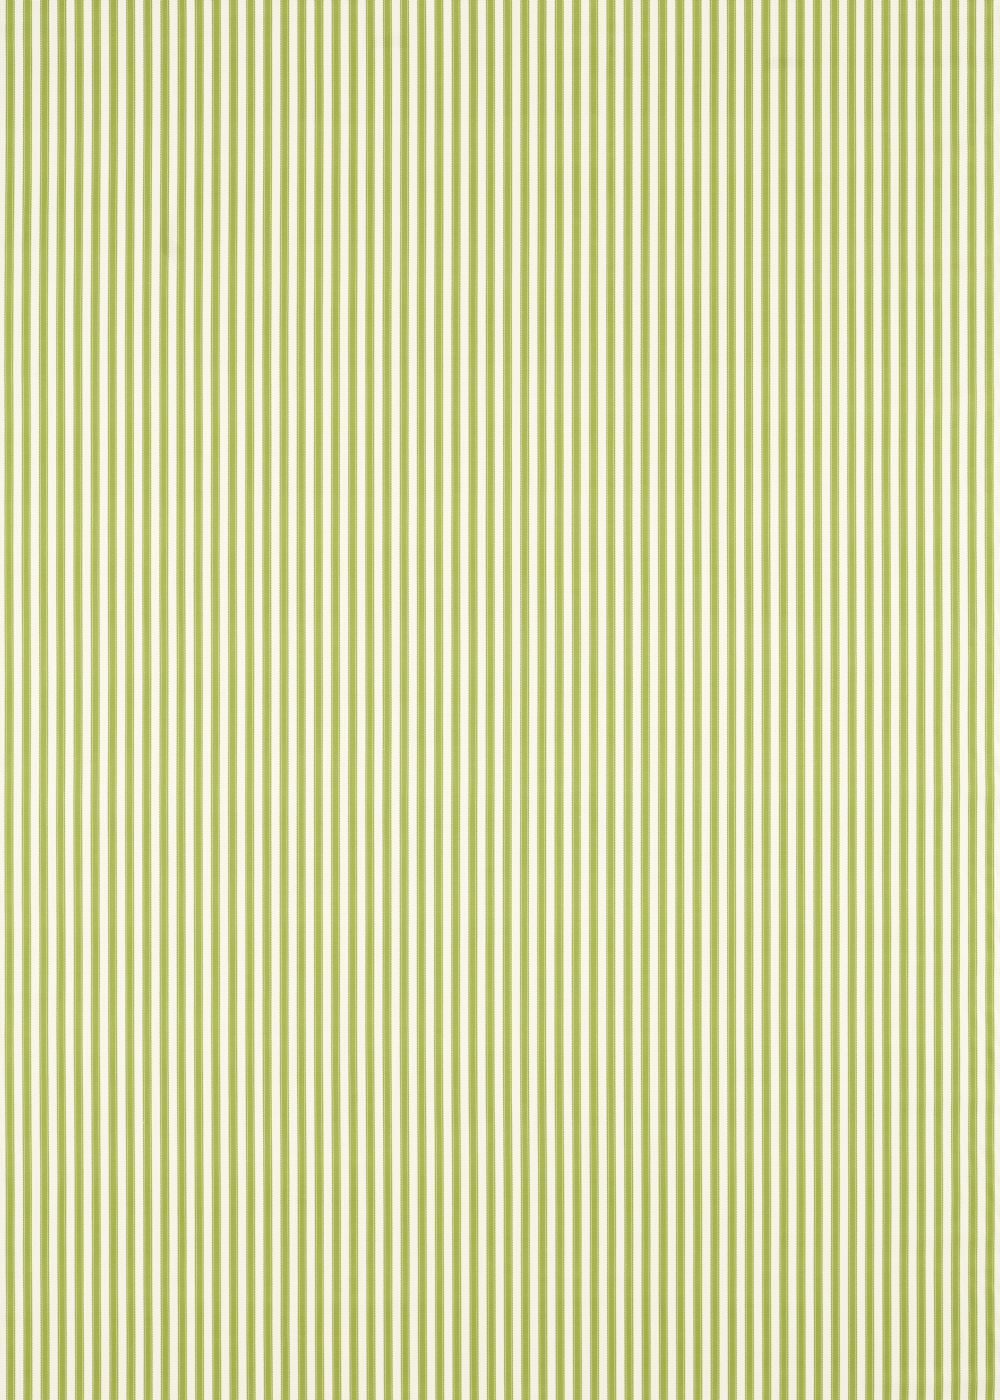 Pinetum Stripe Fabric - Sap Green - by Sanderson